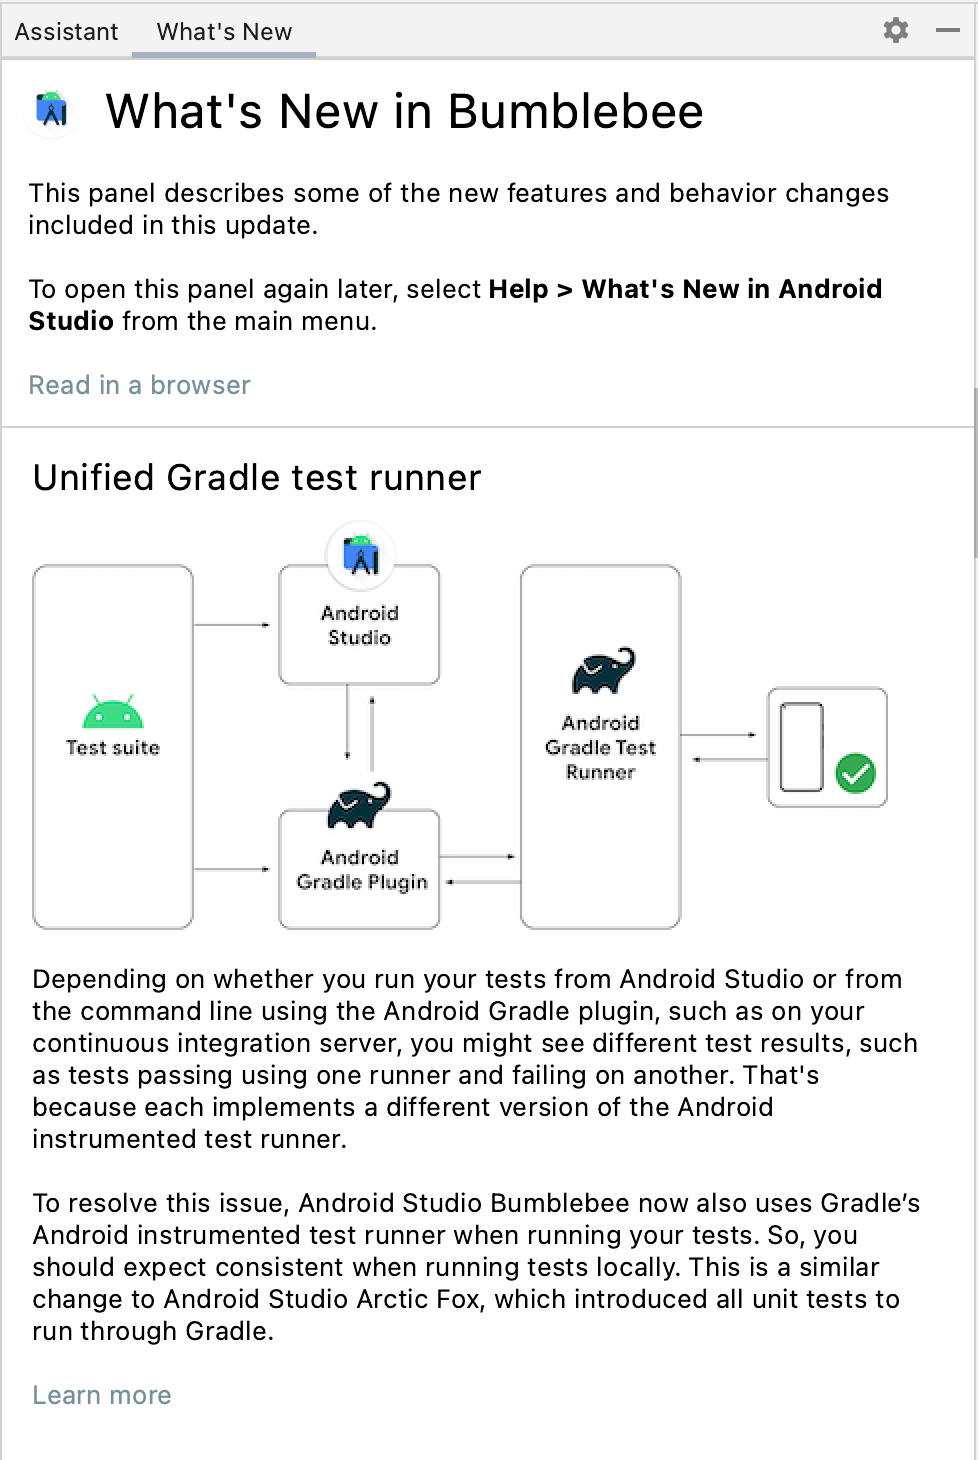 此图片显示了“What's New”窗格，其中提供了有关 Android Studio 更新的信息。